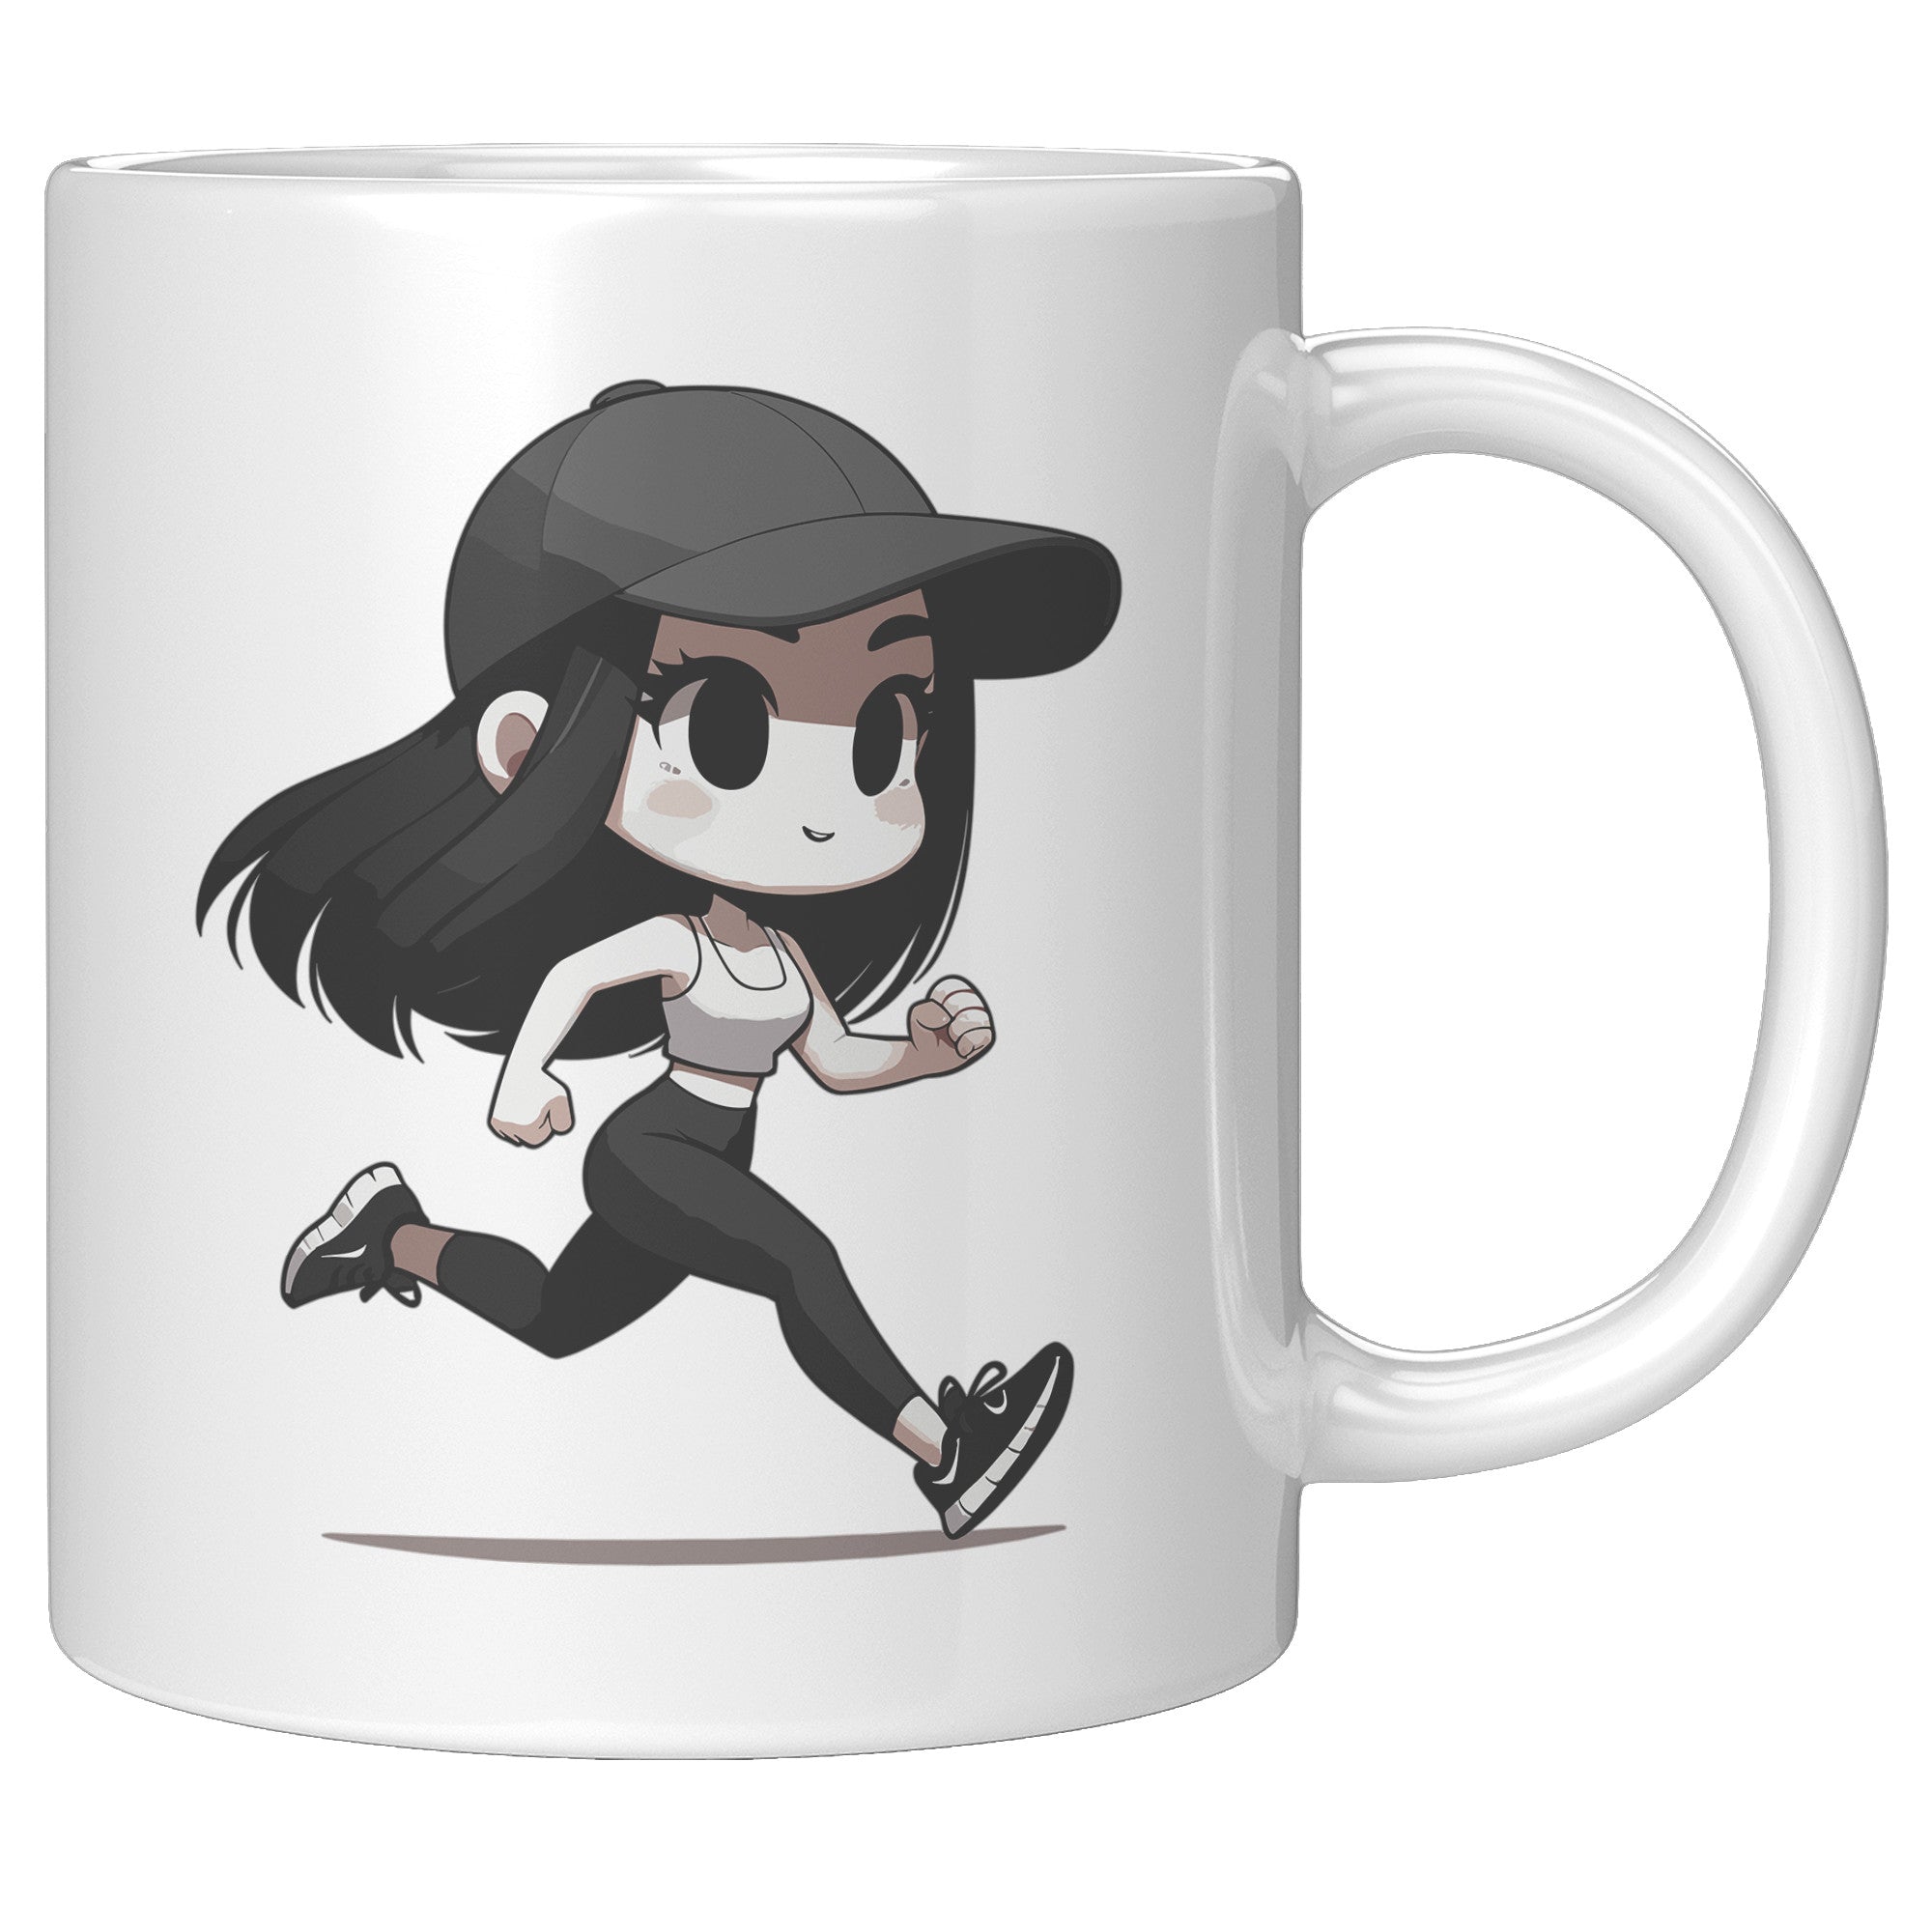 "Female Runner Coffee Mug - Inspirational Running Quotes Cup - Perfect Gift for Women Runners - Motivational Marathoner's Morning Brew" - C